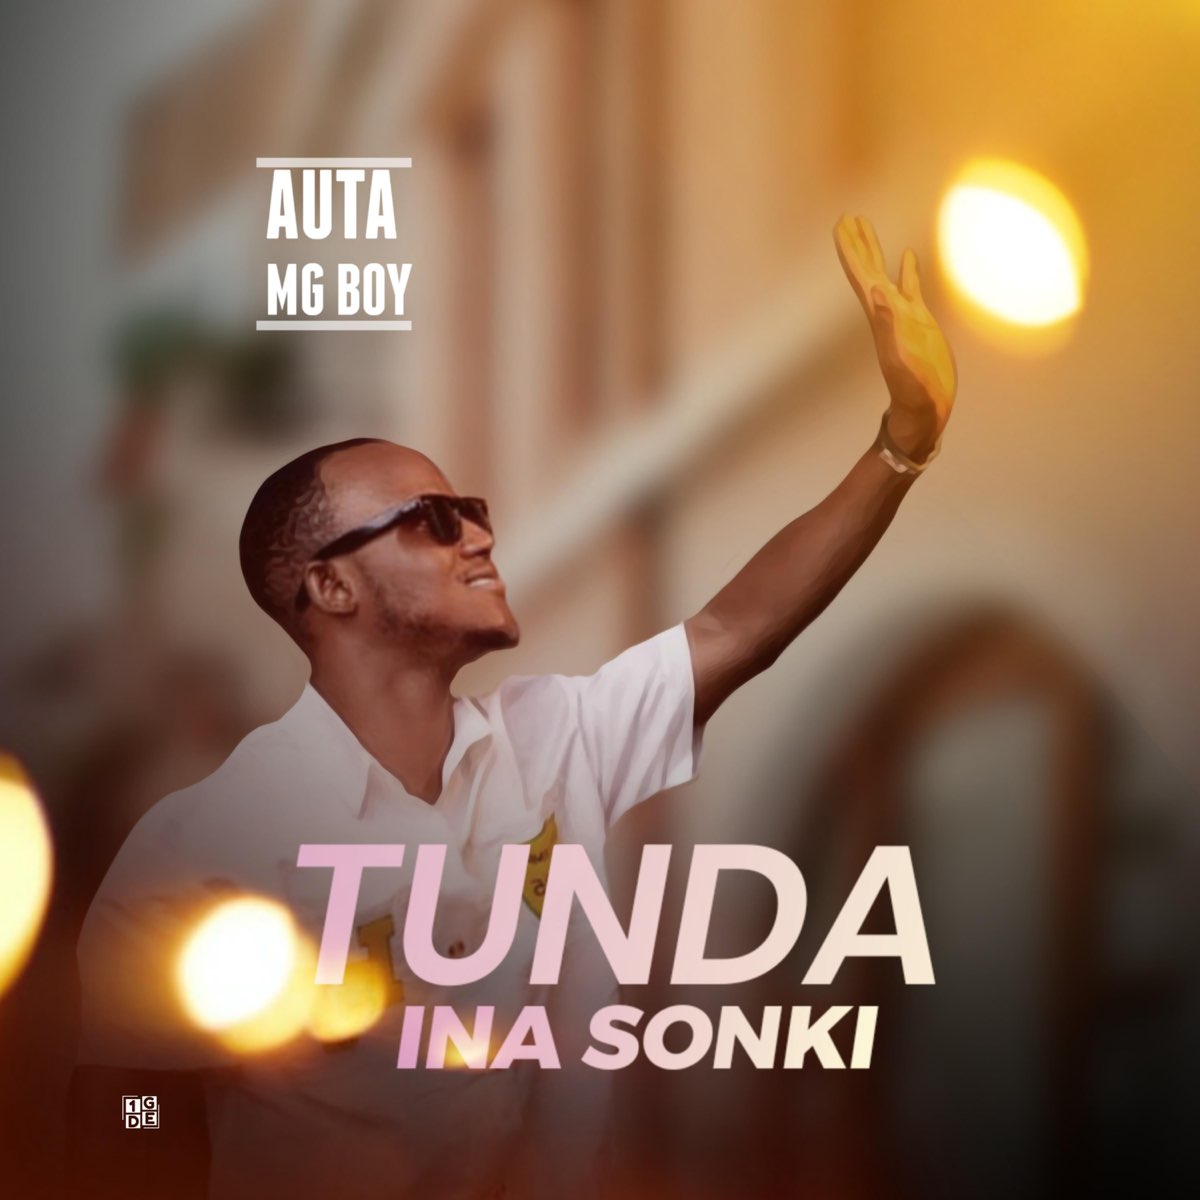 Auta Mg Boy - Tunda Ina Sonki Official Download Audio